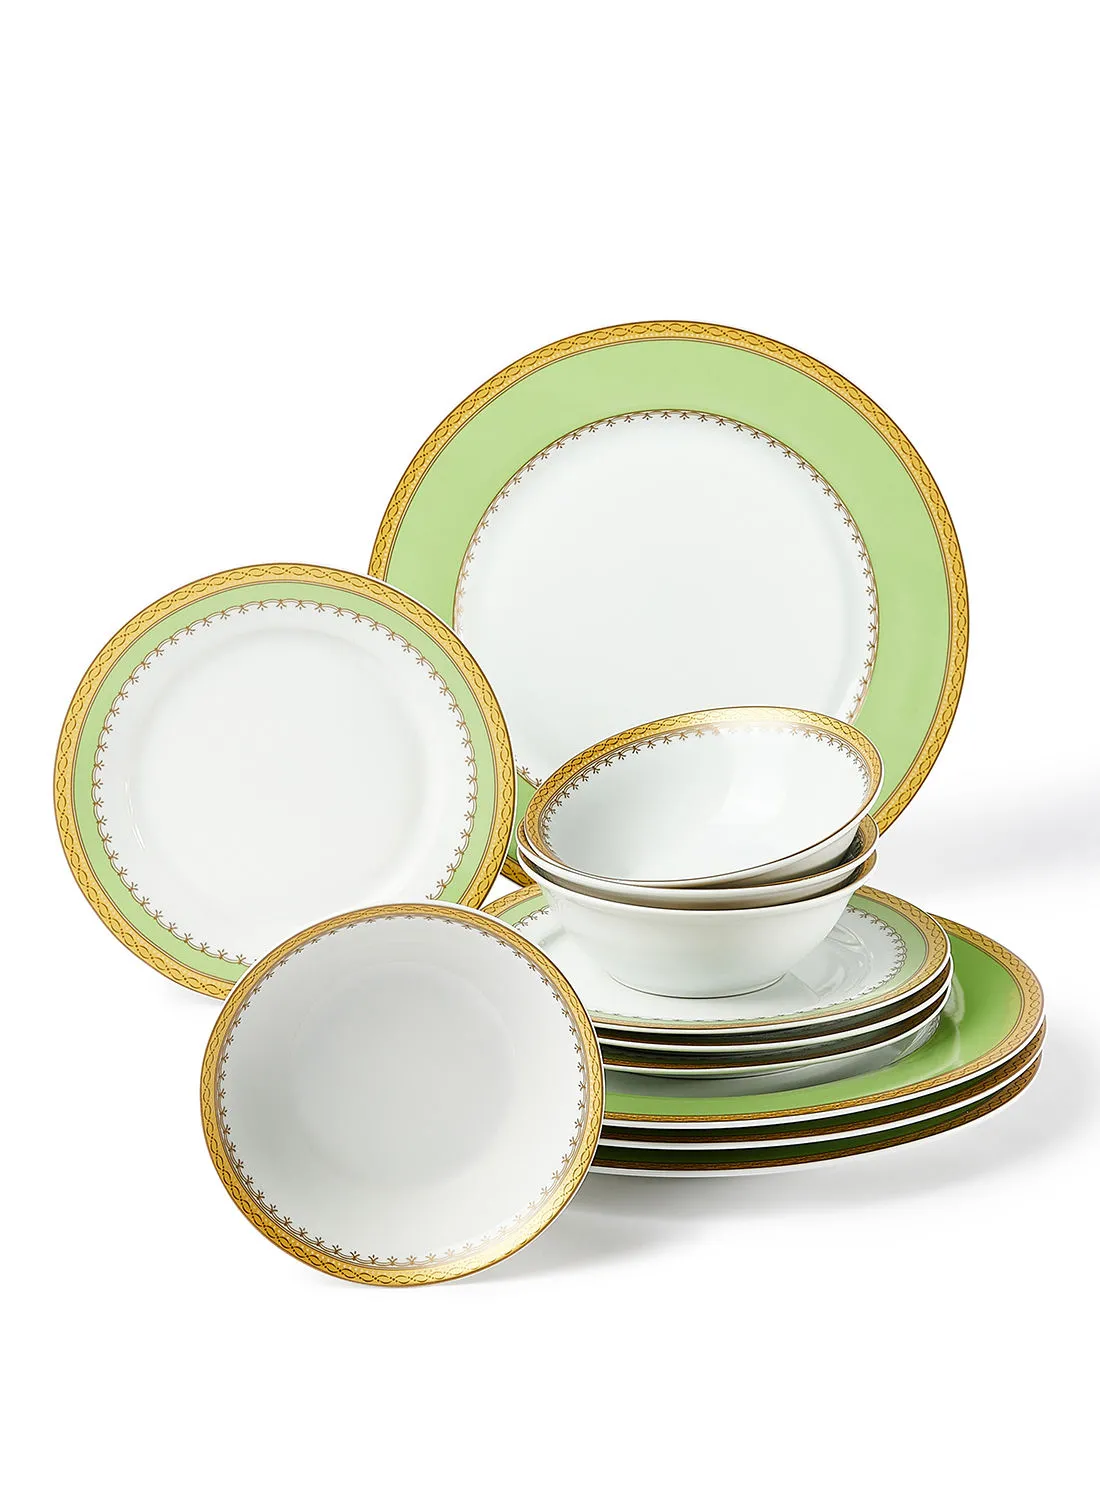 noon east 12 Piece Porcelain Dinner Set - Dishes, Plates - Dinner Plate, Side Plate, Soup Plate - Serves 4 - Printed Design Greenscape